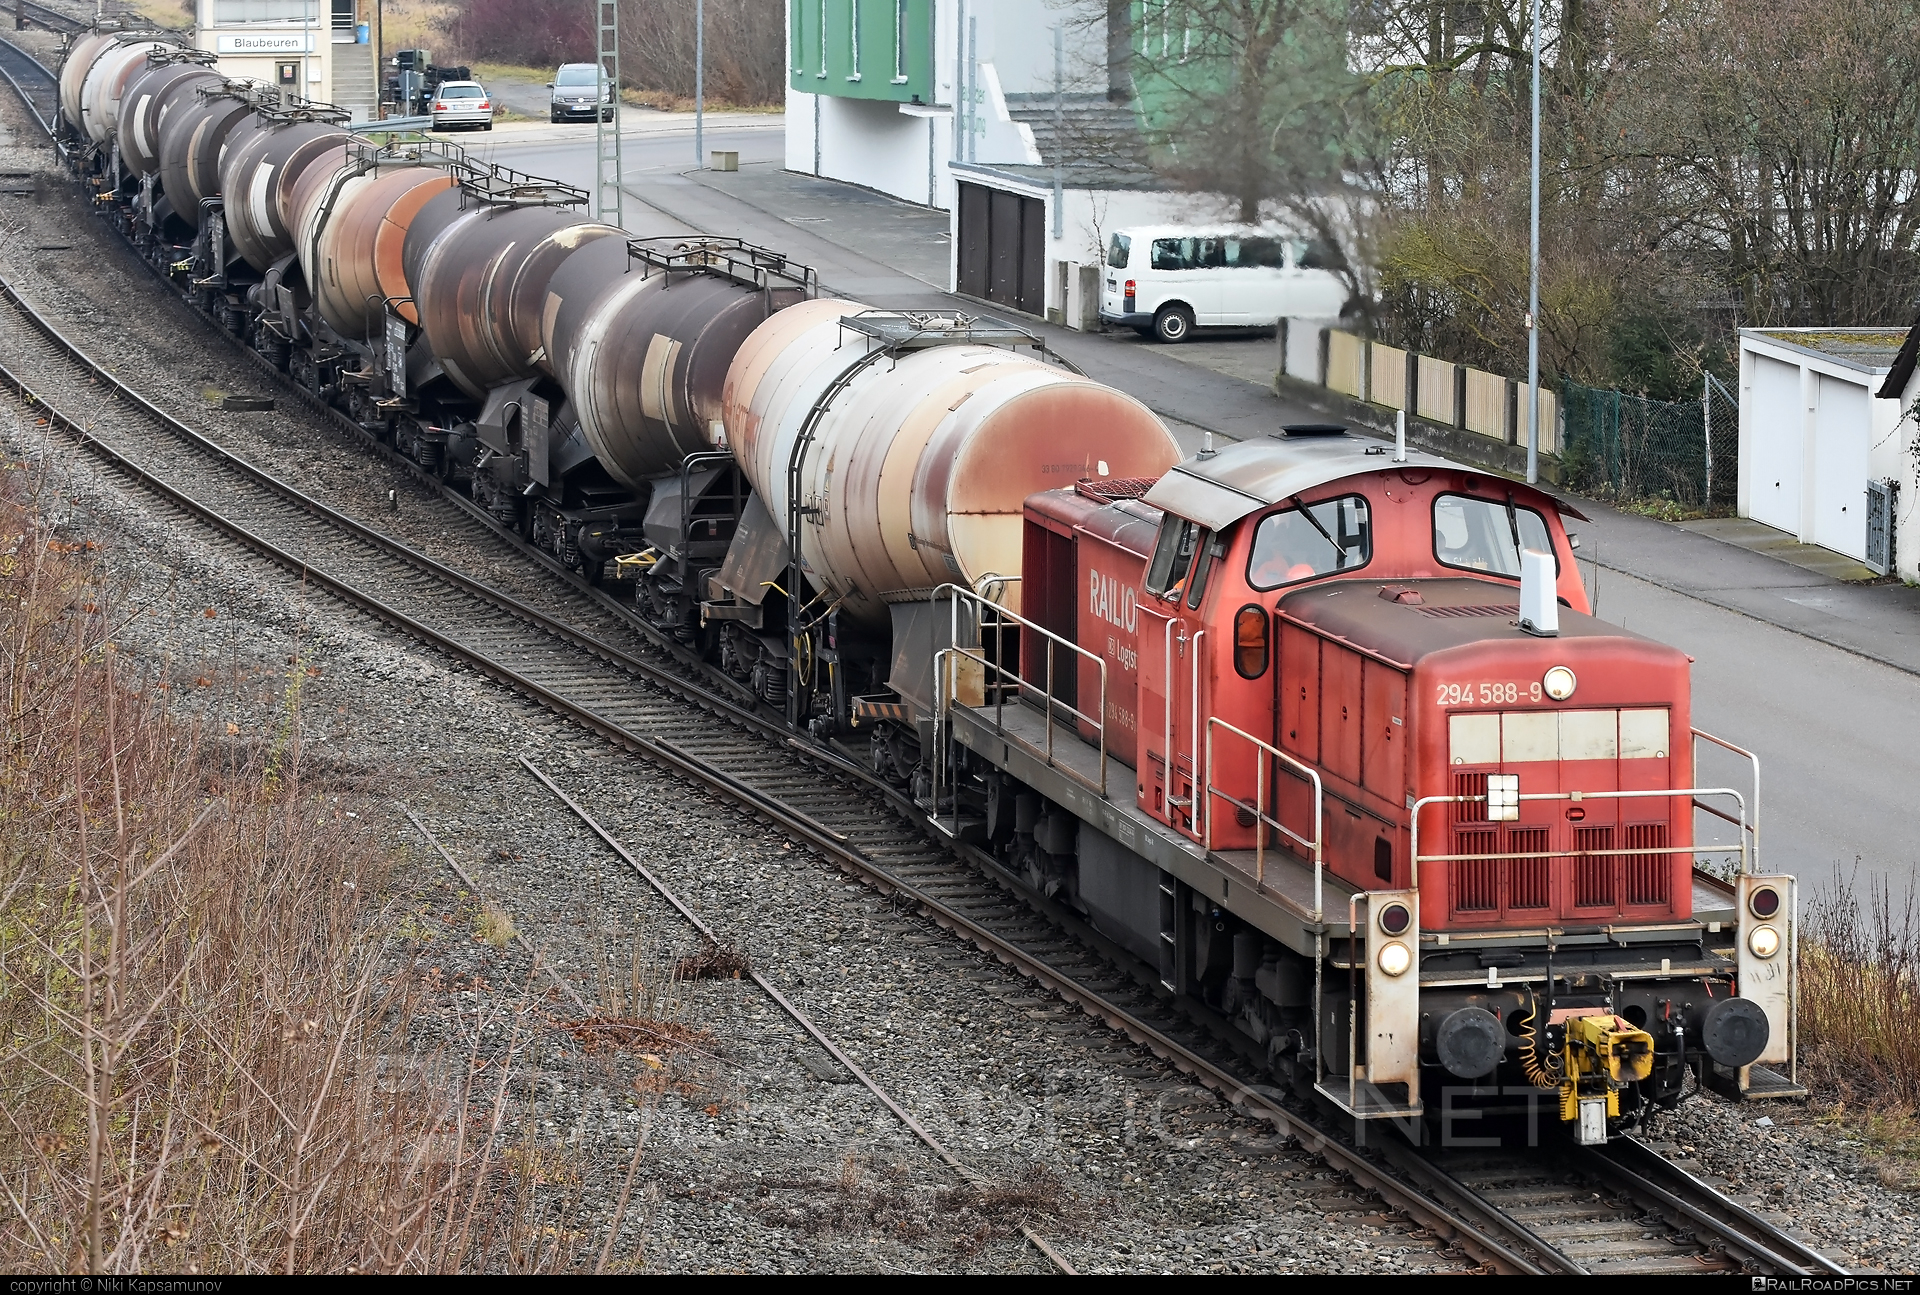 Deutz V90 - 294 588-9 operated by DB Cargo AG #db #dbcargo #dbcargoag #deutz #deutzv90 #locomotiveclassv90 #makv90 #railion